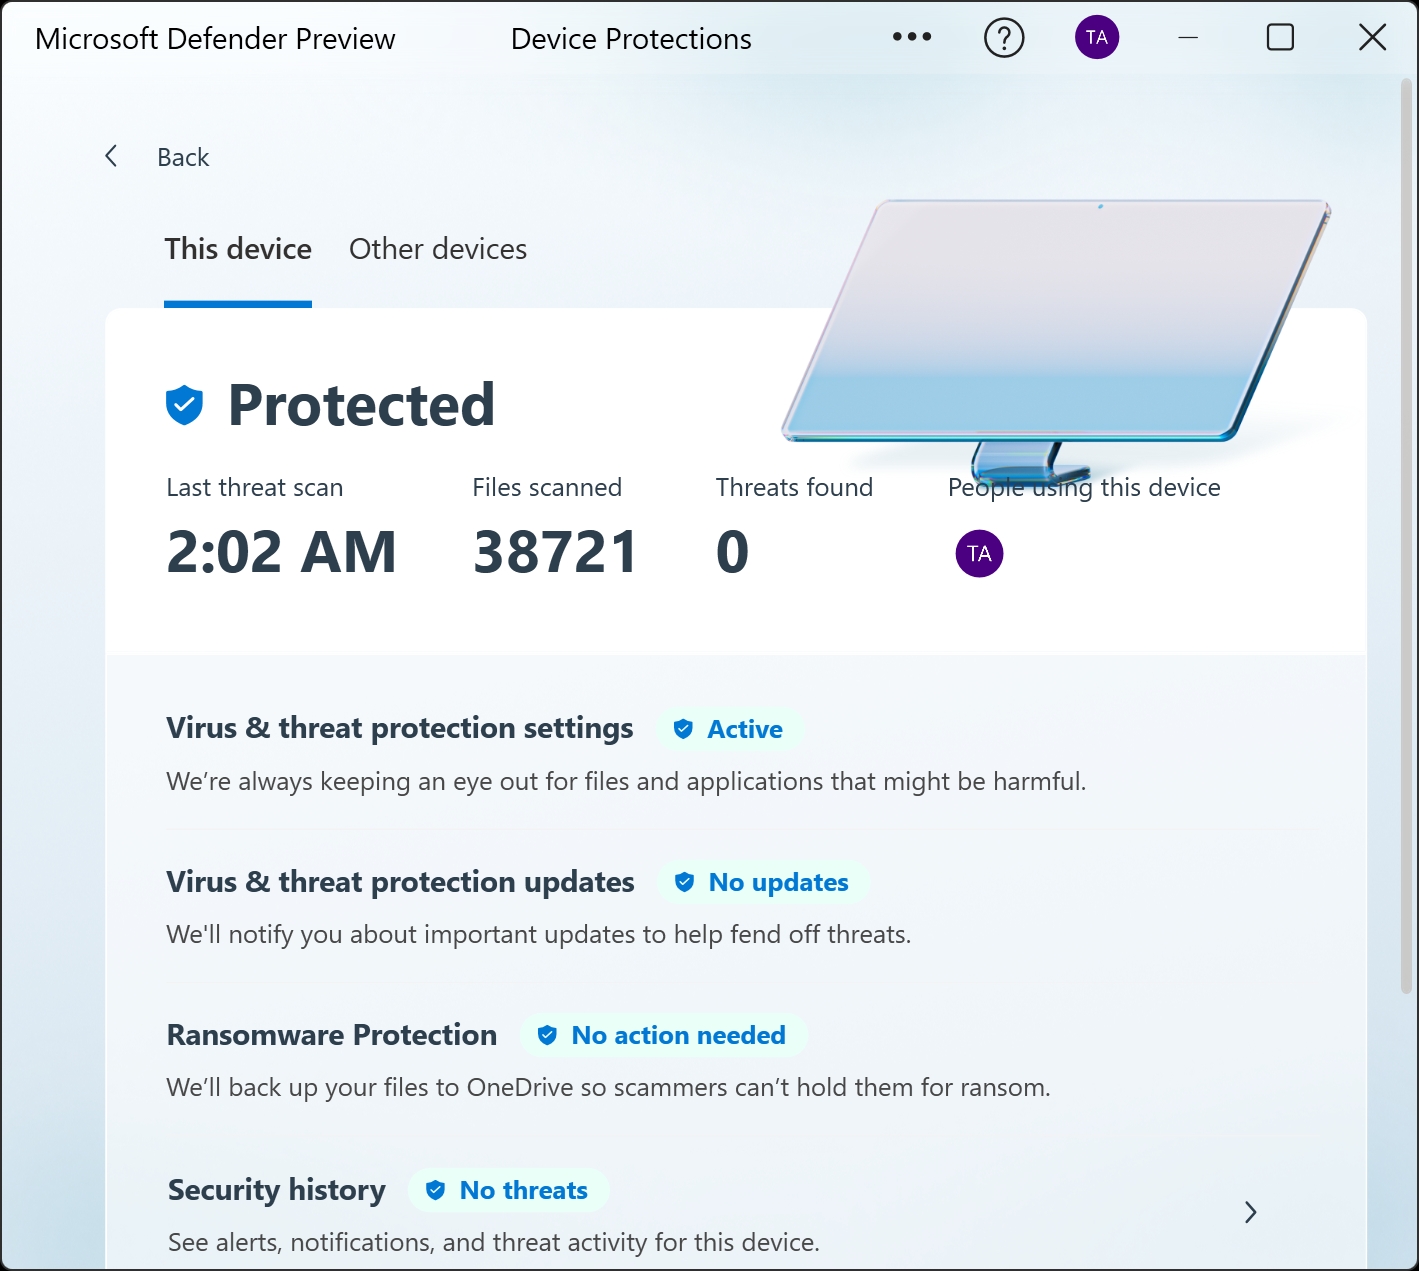 Microsoft Defender Preview